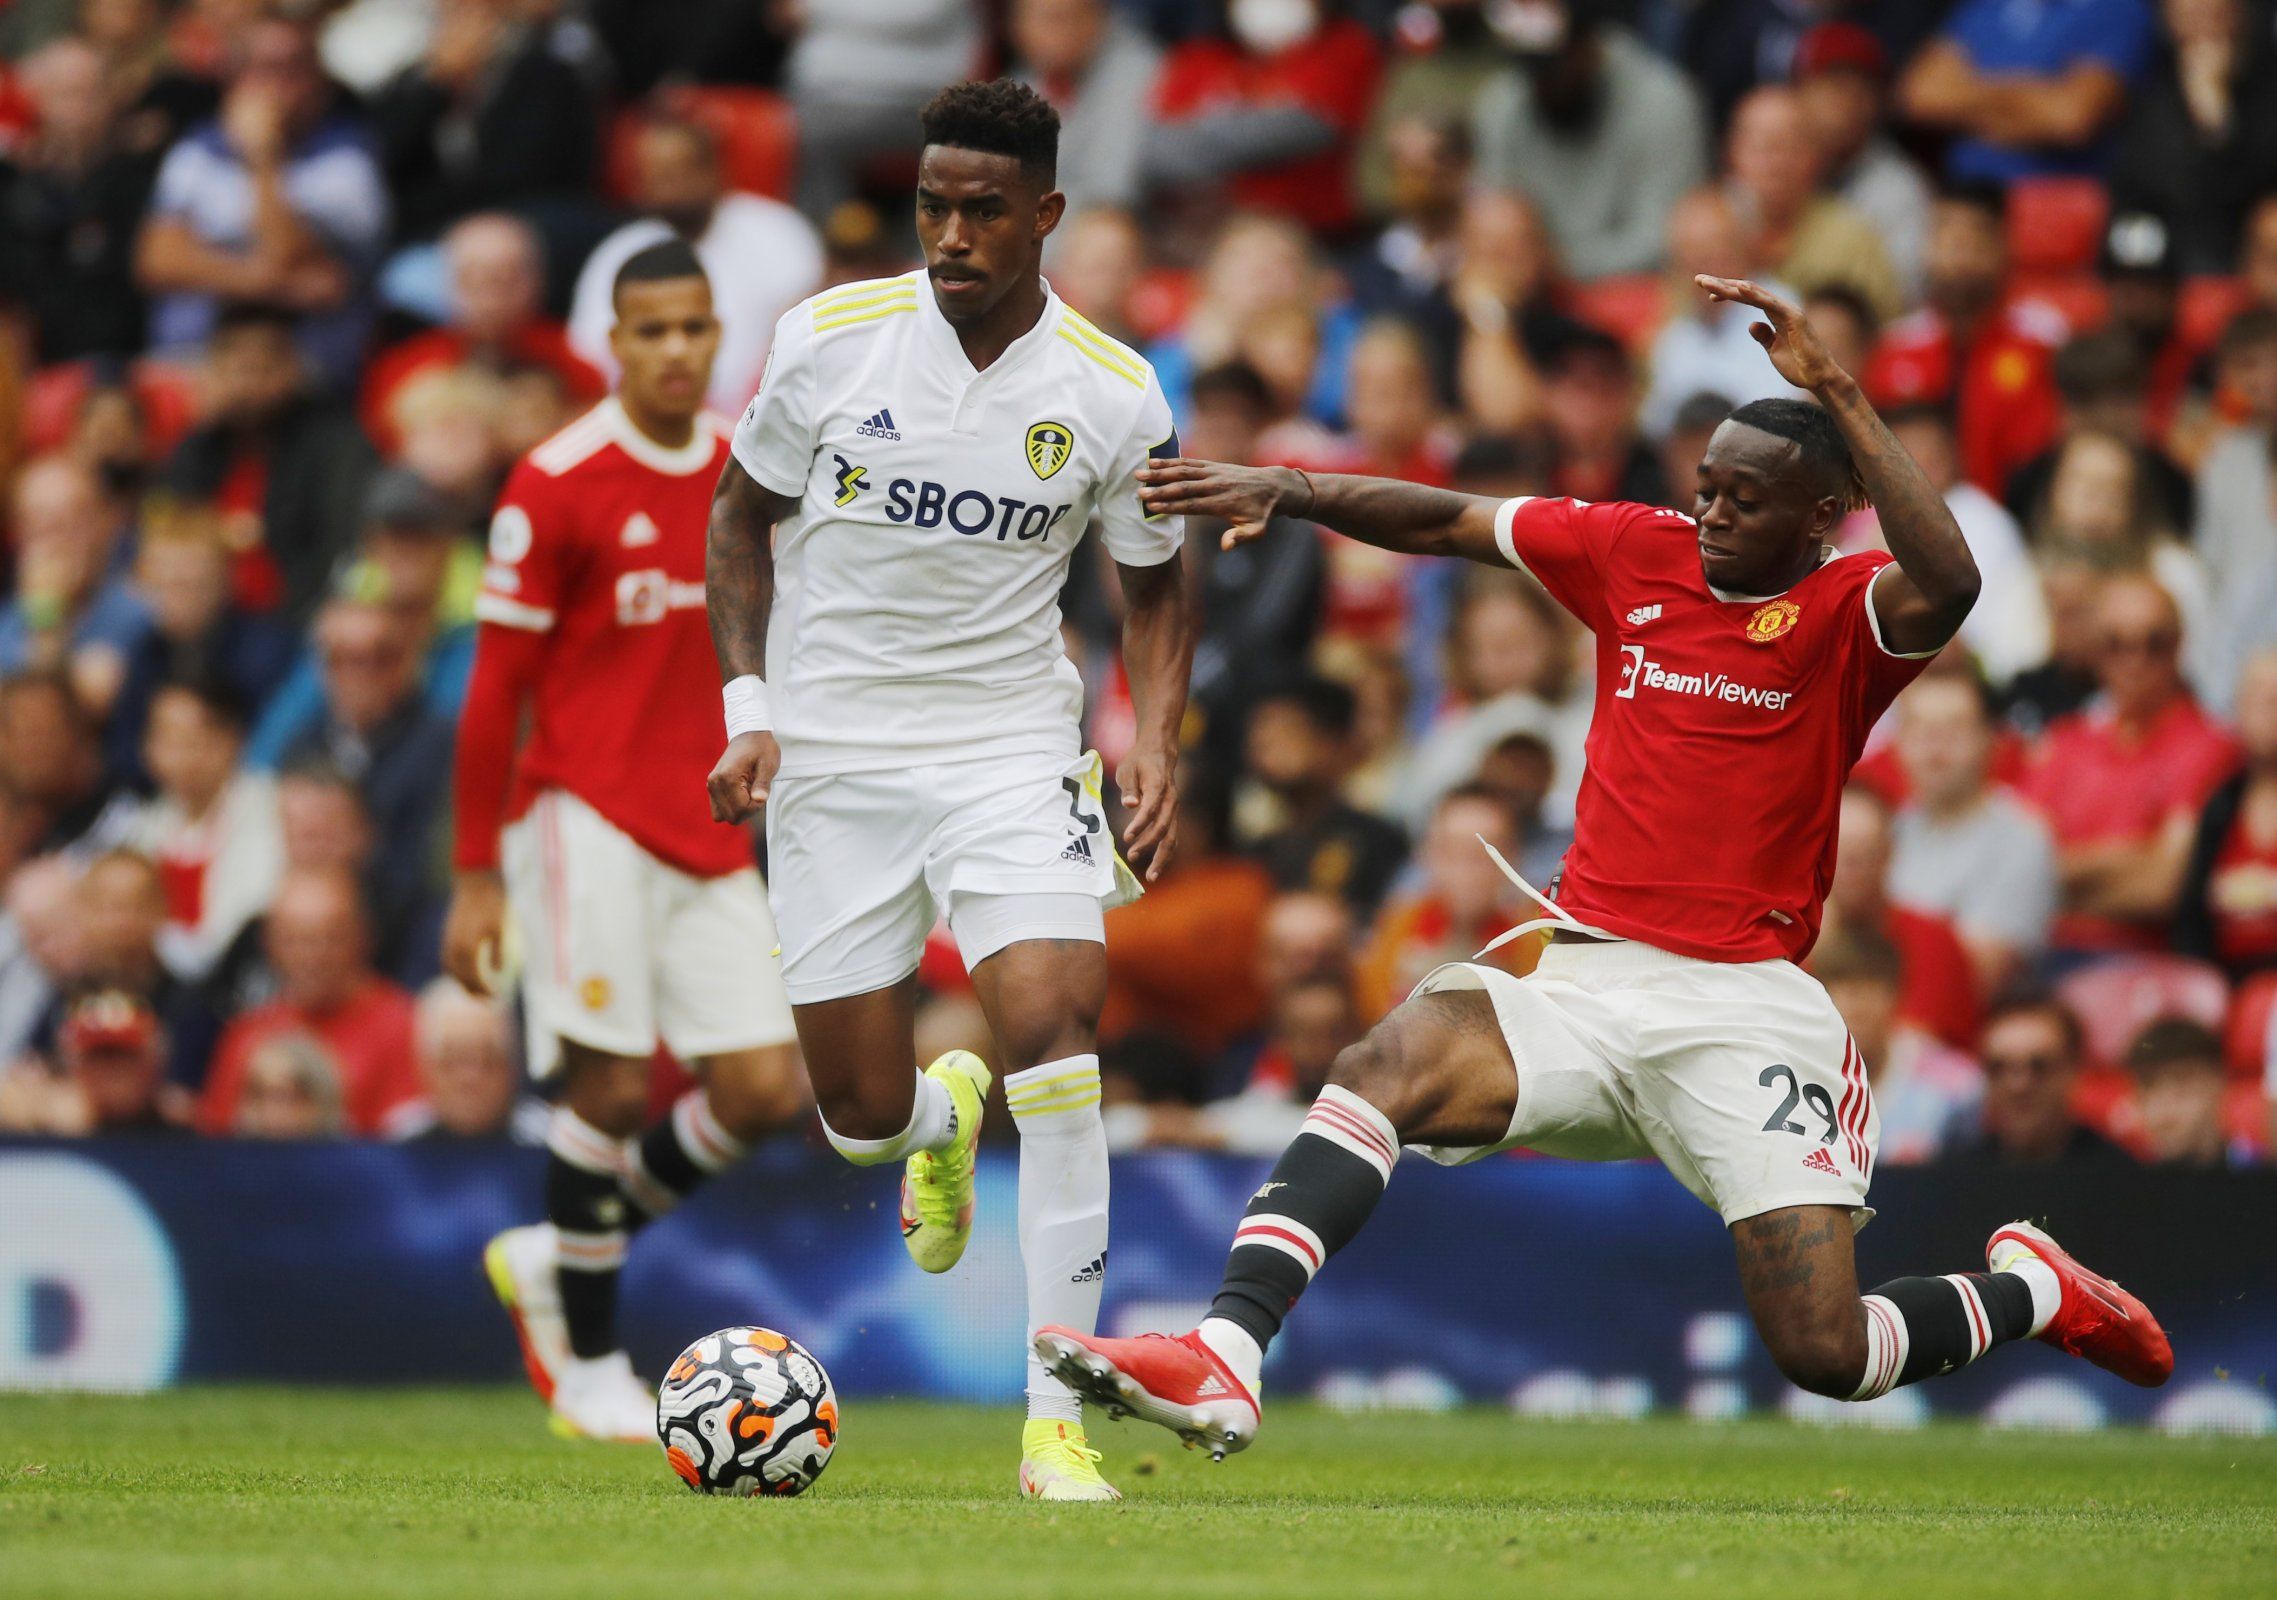 Leeds United's Junior Firpo battles Manchester United's Aaron Wan-Bissaka